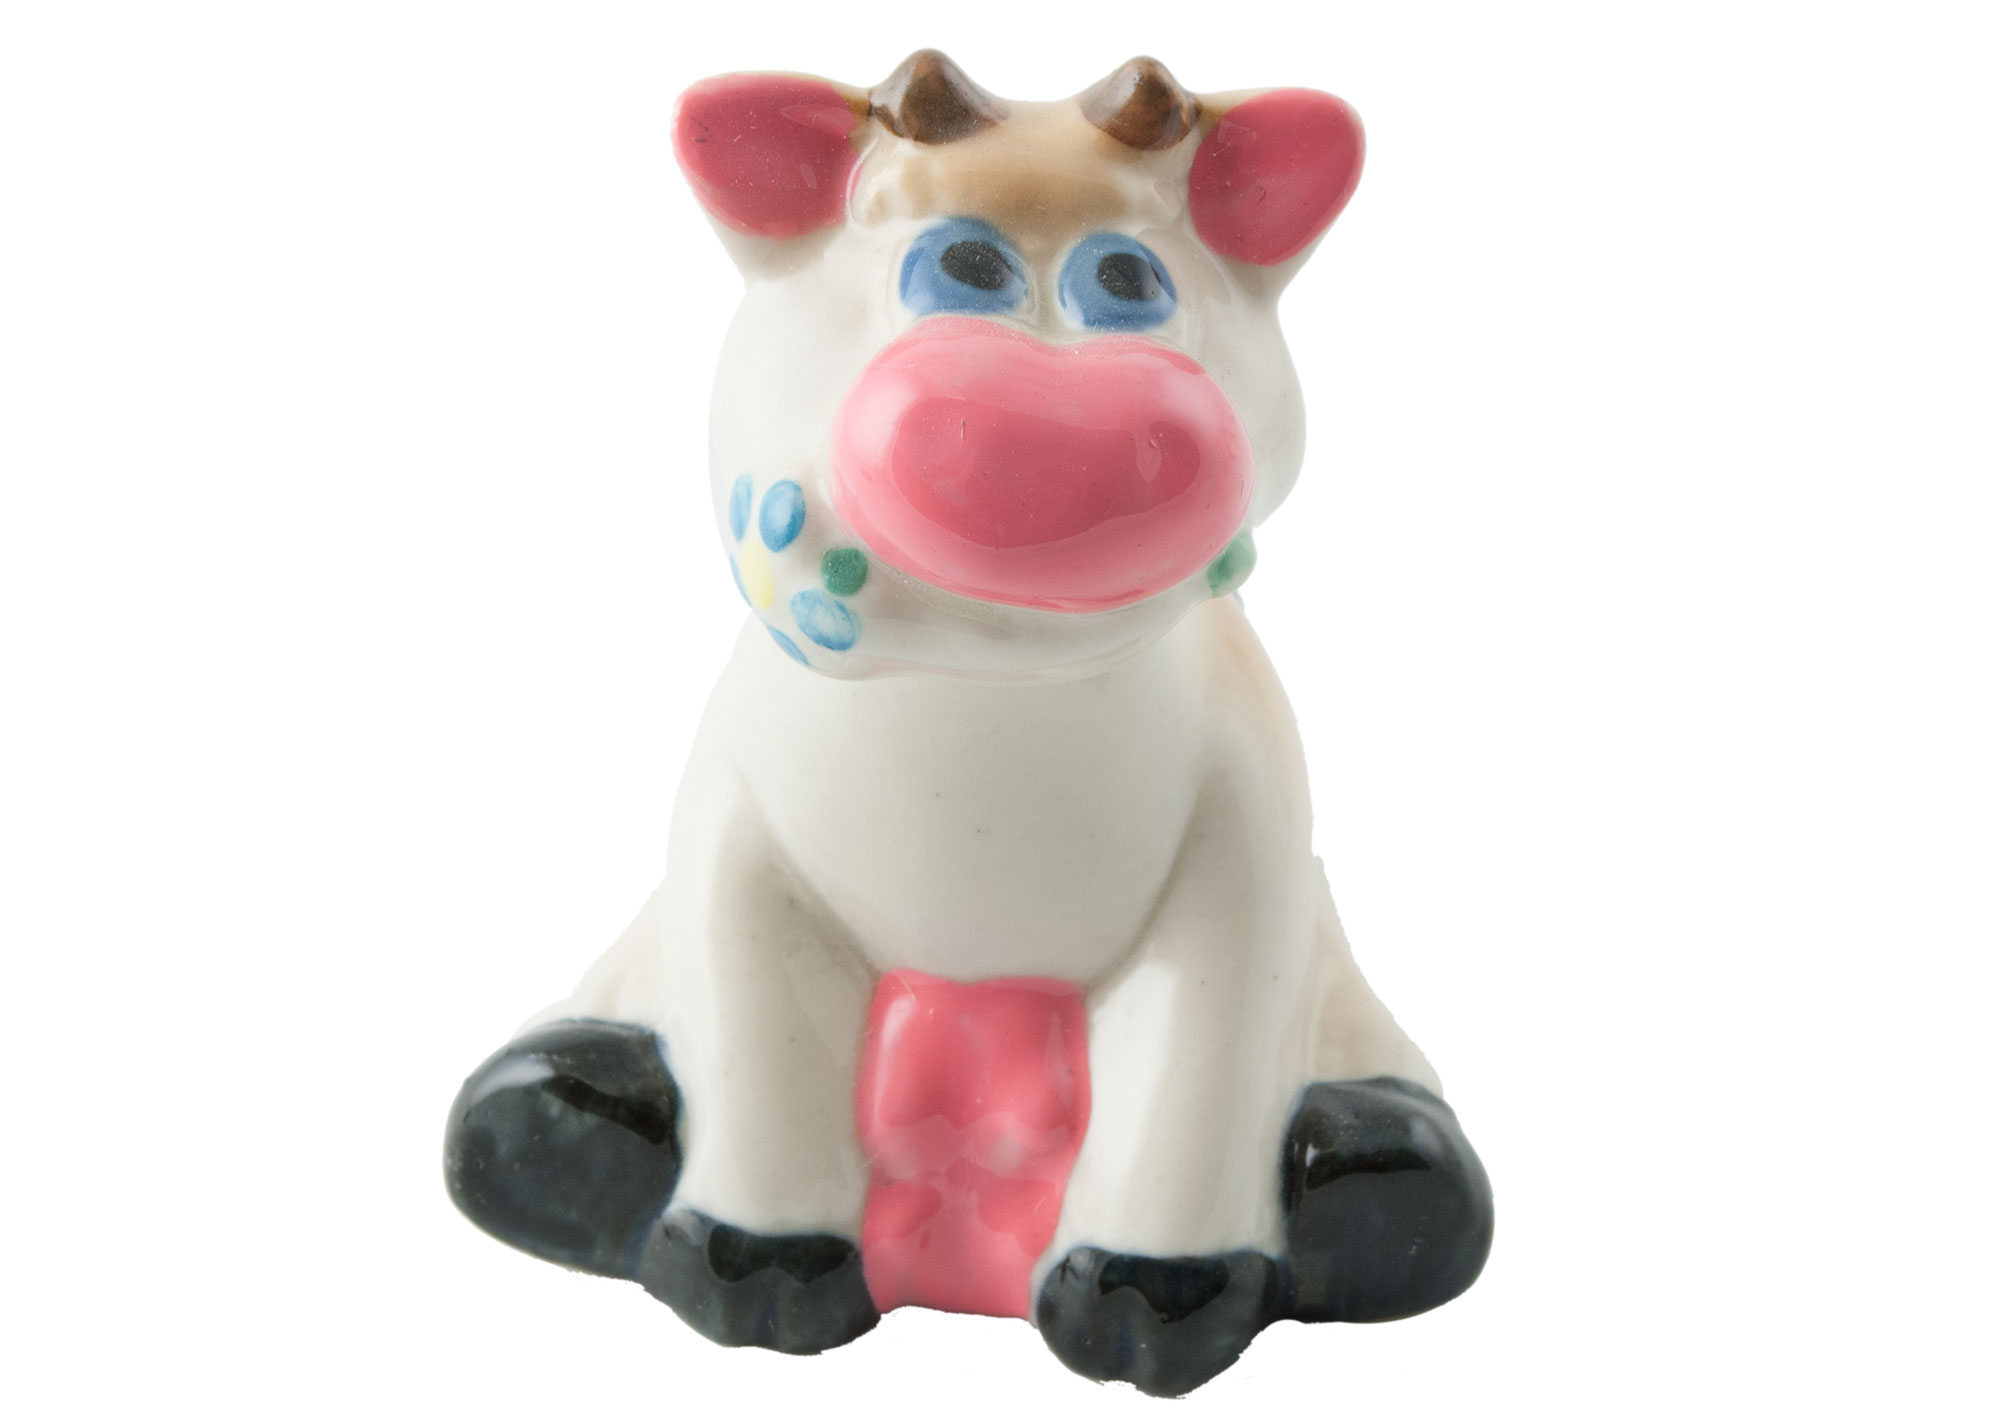 Buy Cow Sitting Porcelain Figurine at GoldenCockerel.com